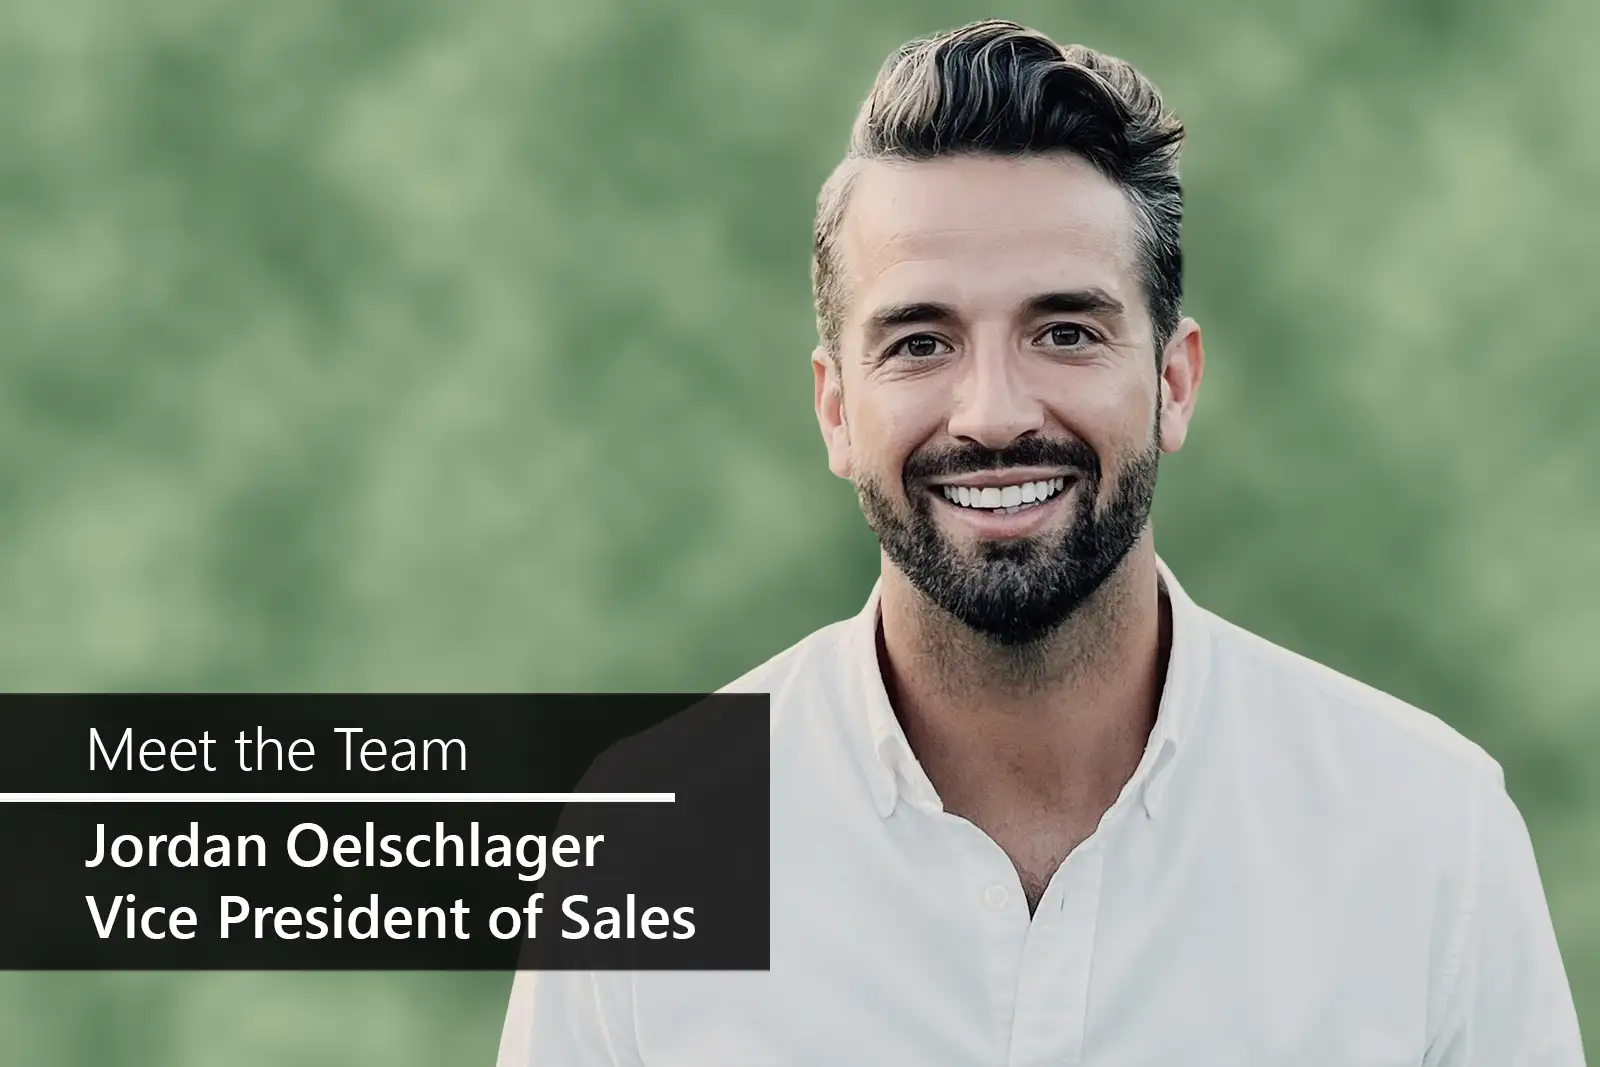 Meet the Team - Jordan Oelschlager